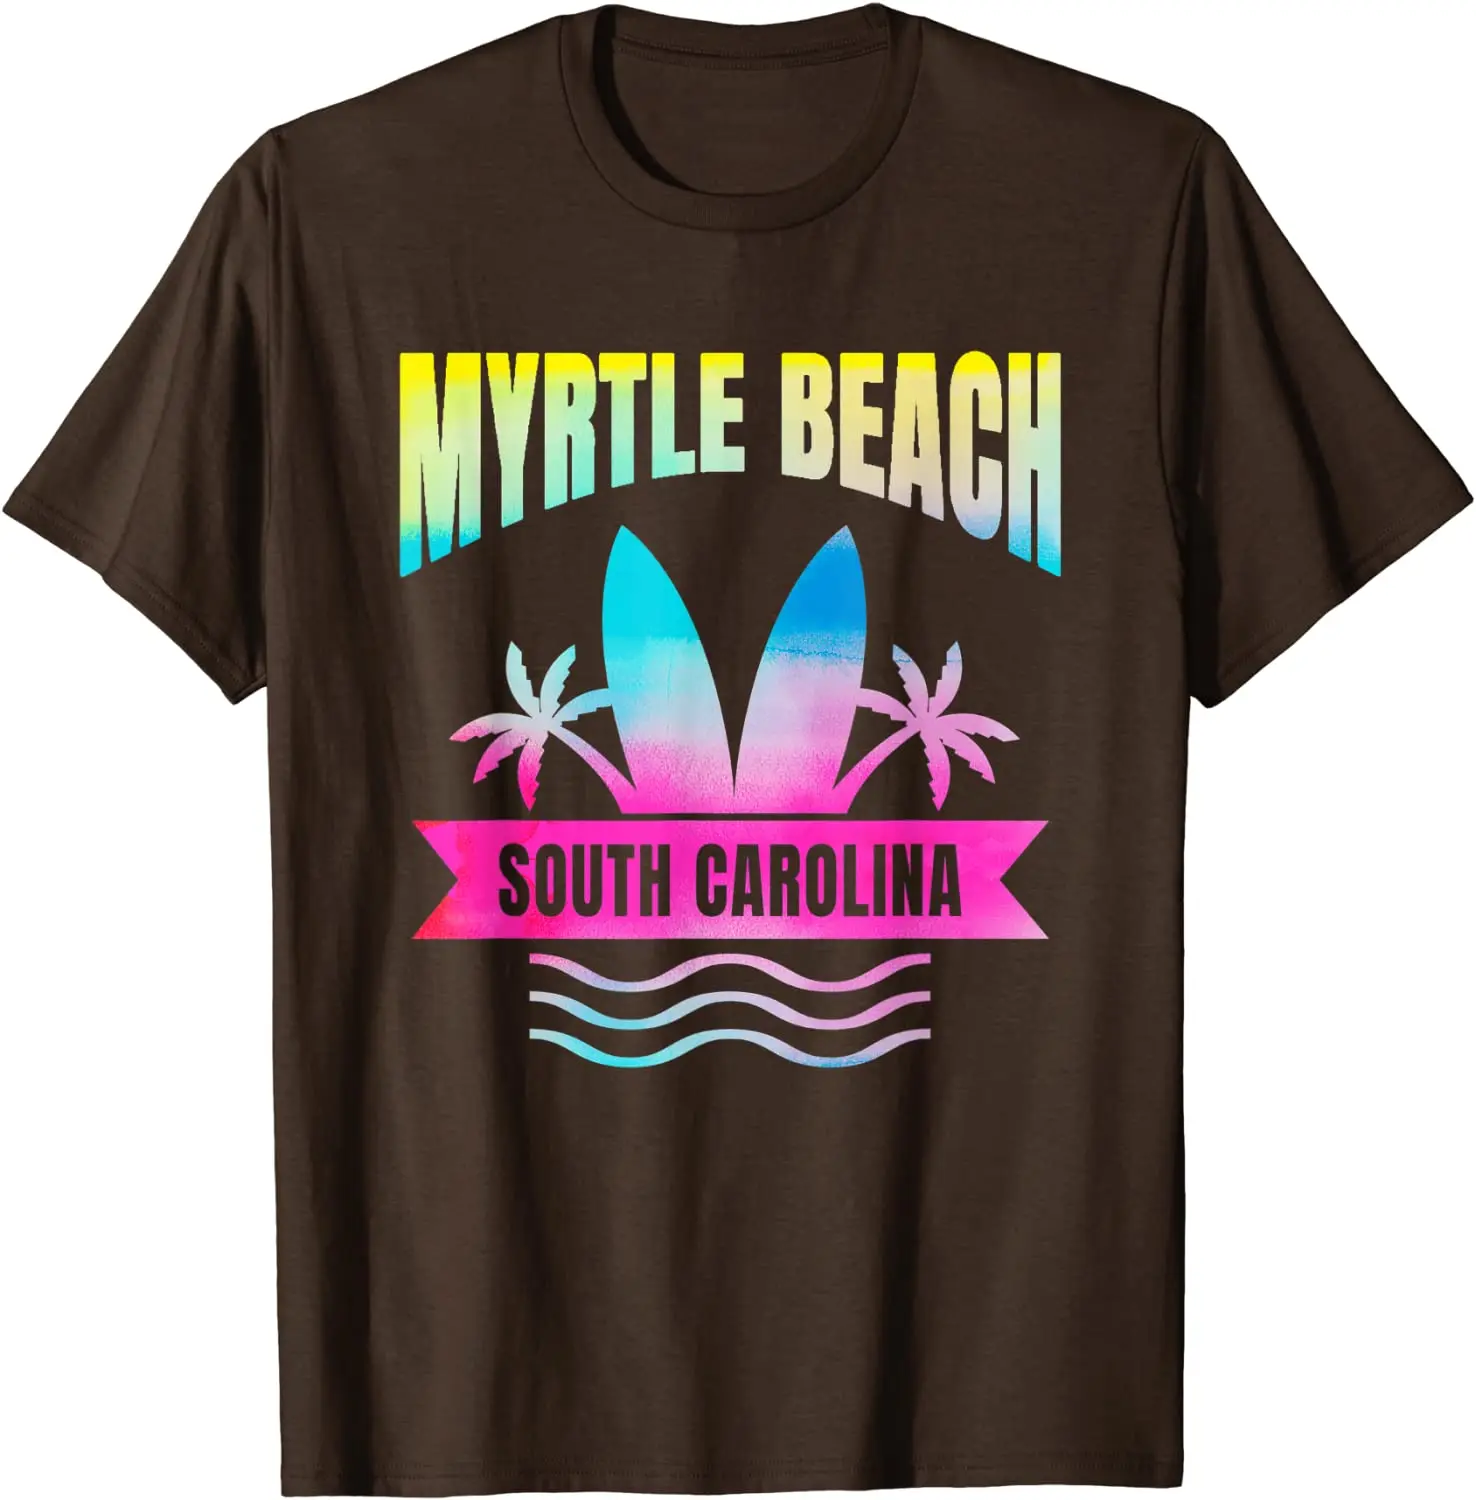 NFL Jerseys for sale in Myrtle Beach, South Carolina